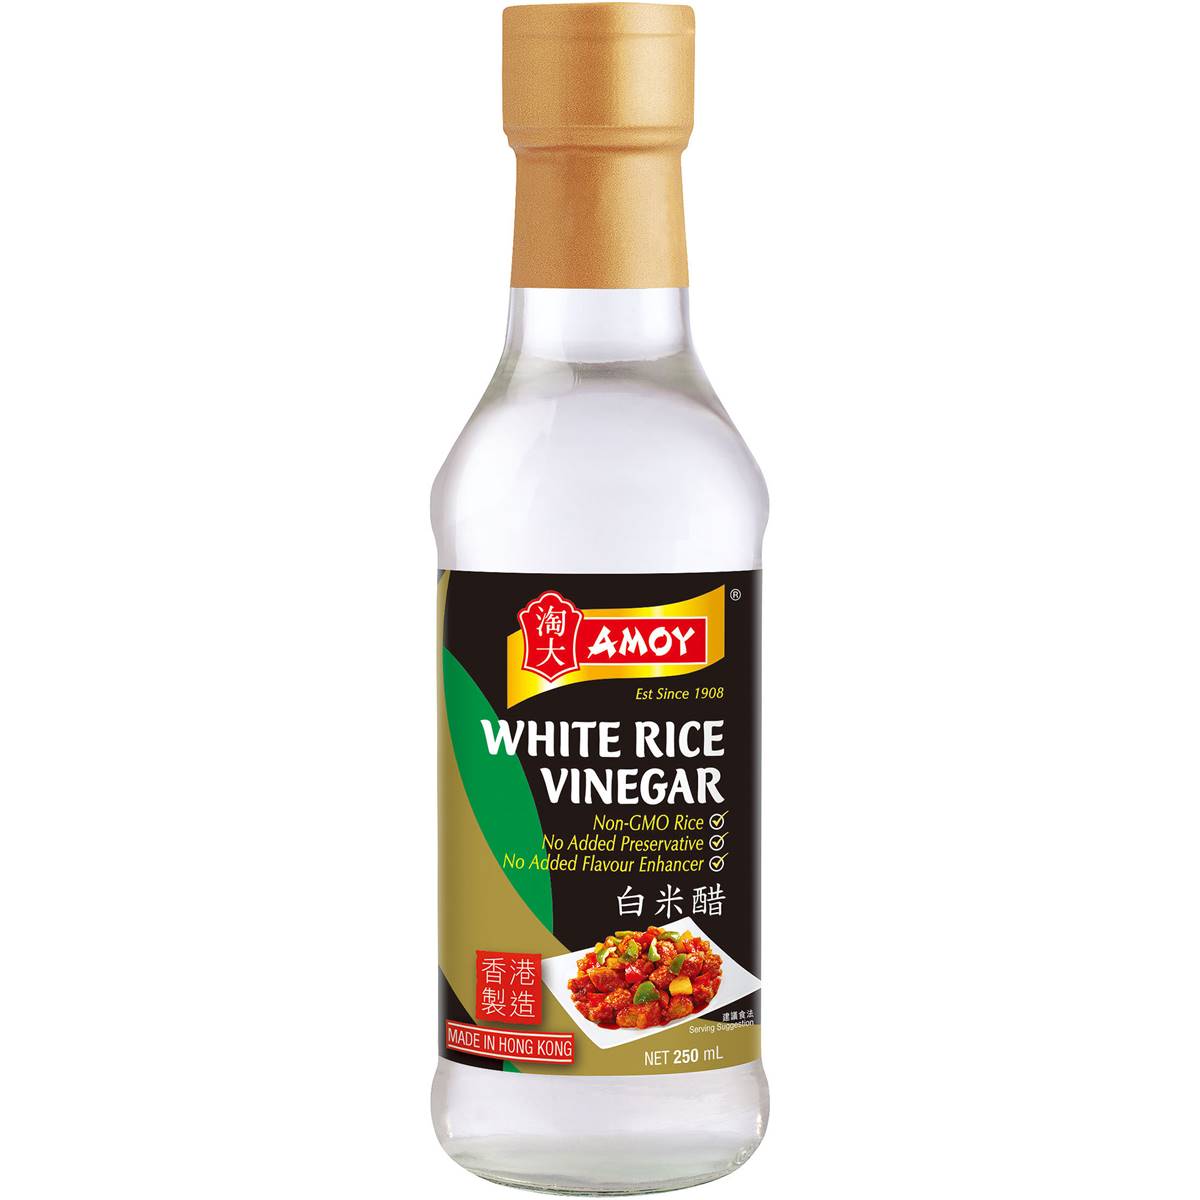 is rice wine vinegar halal